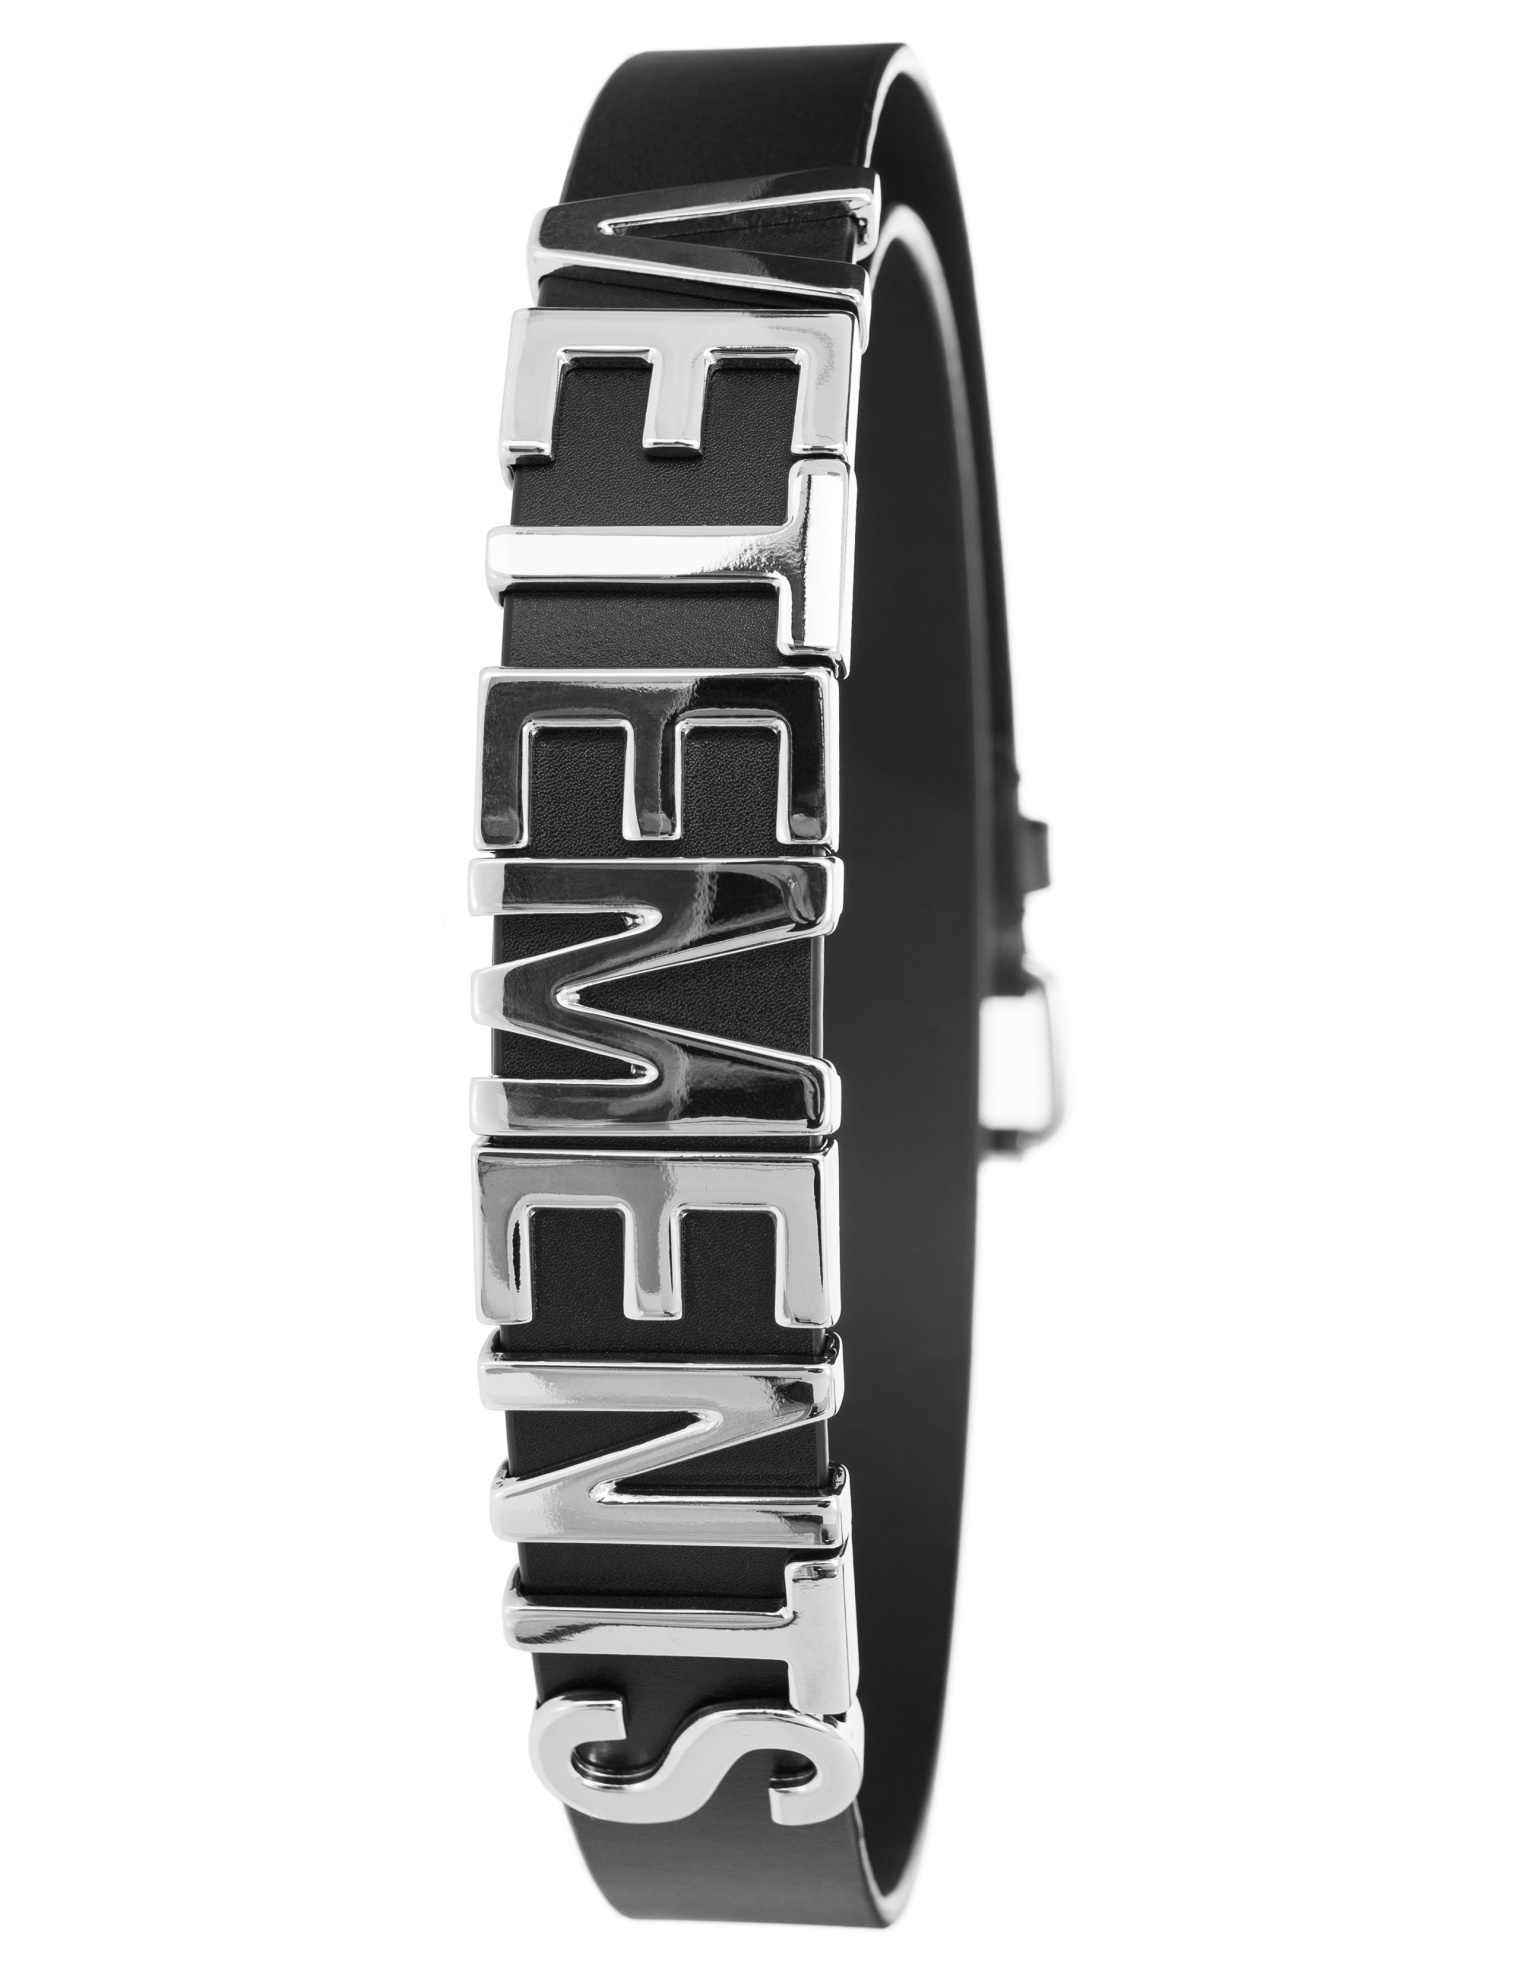 VETEMENTS Black leather belt with logo